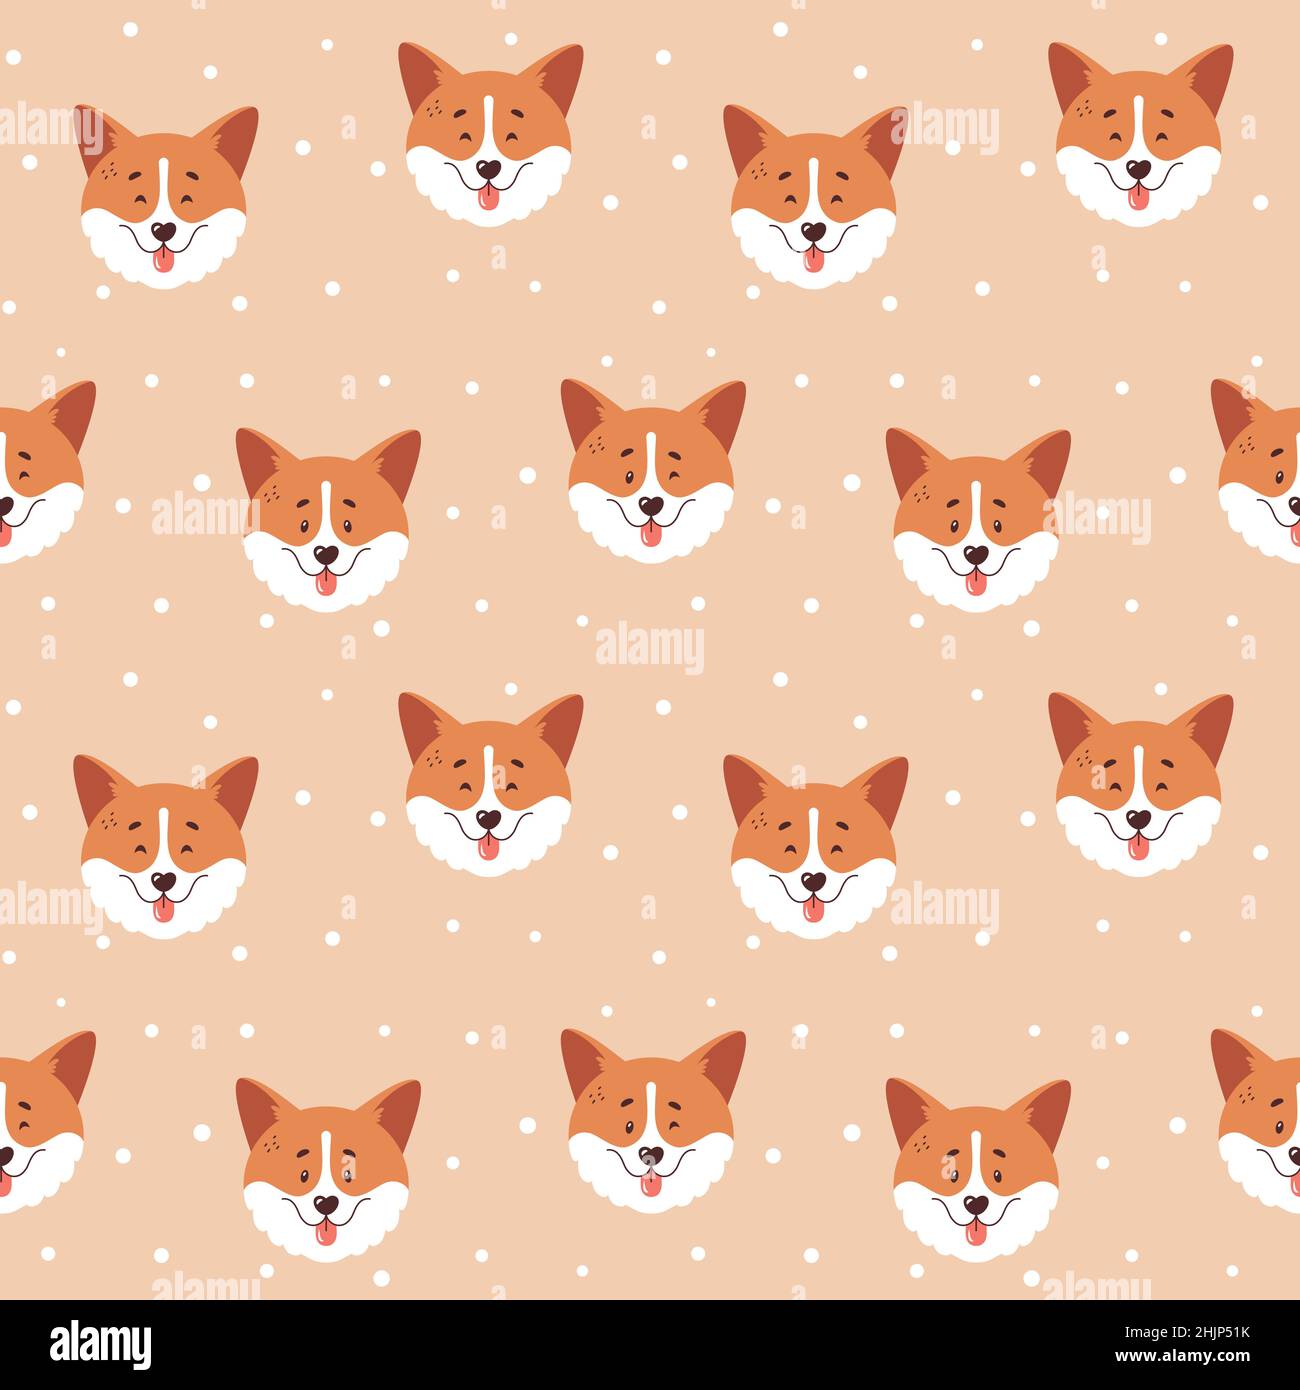 Corgi seamless pattern. Cute smiling welsh corgi faces and polka dot background. Happy dog characters. Vector illustration. Stock Vector